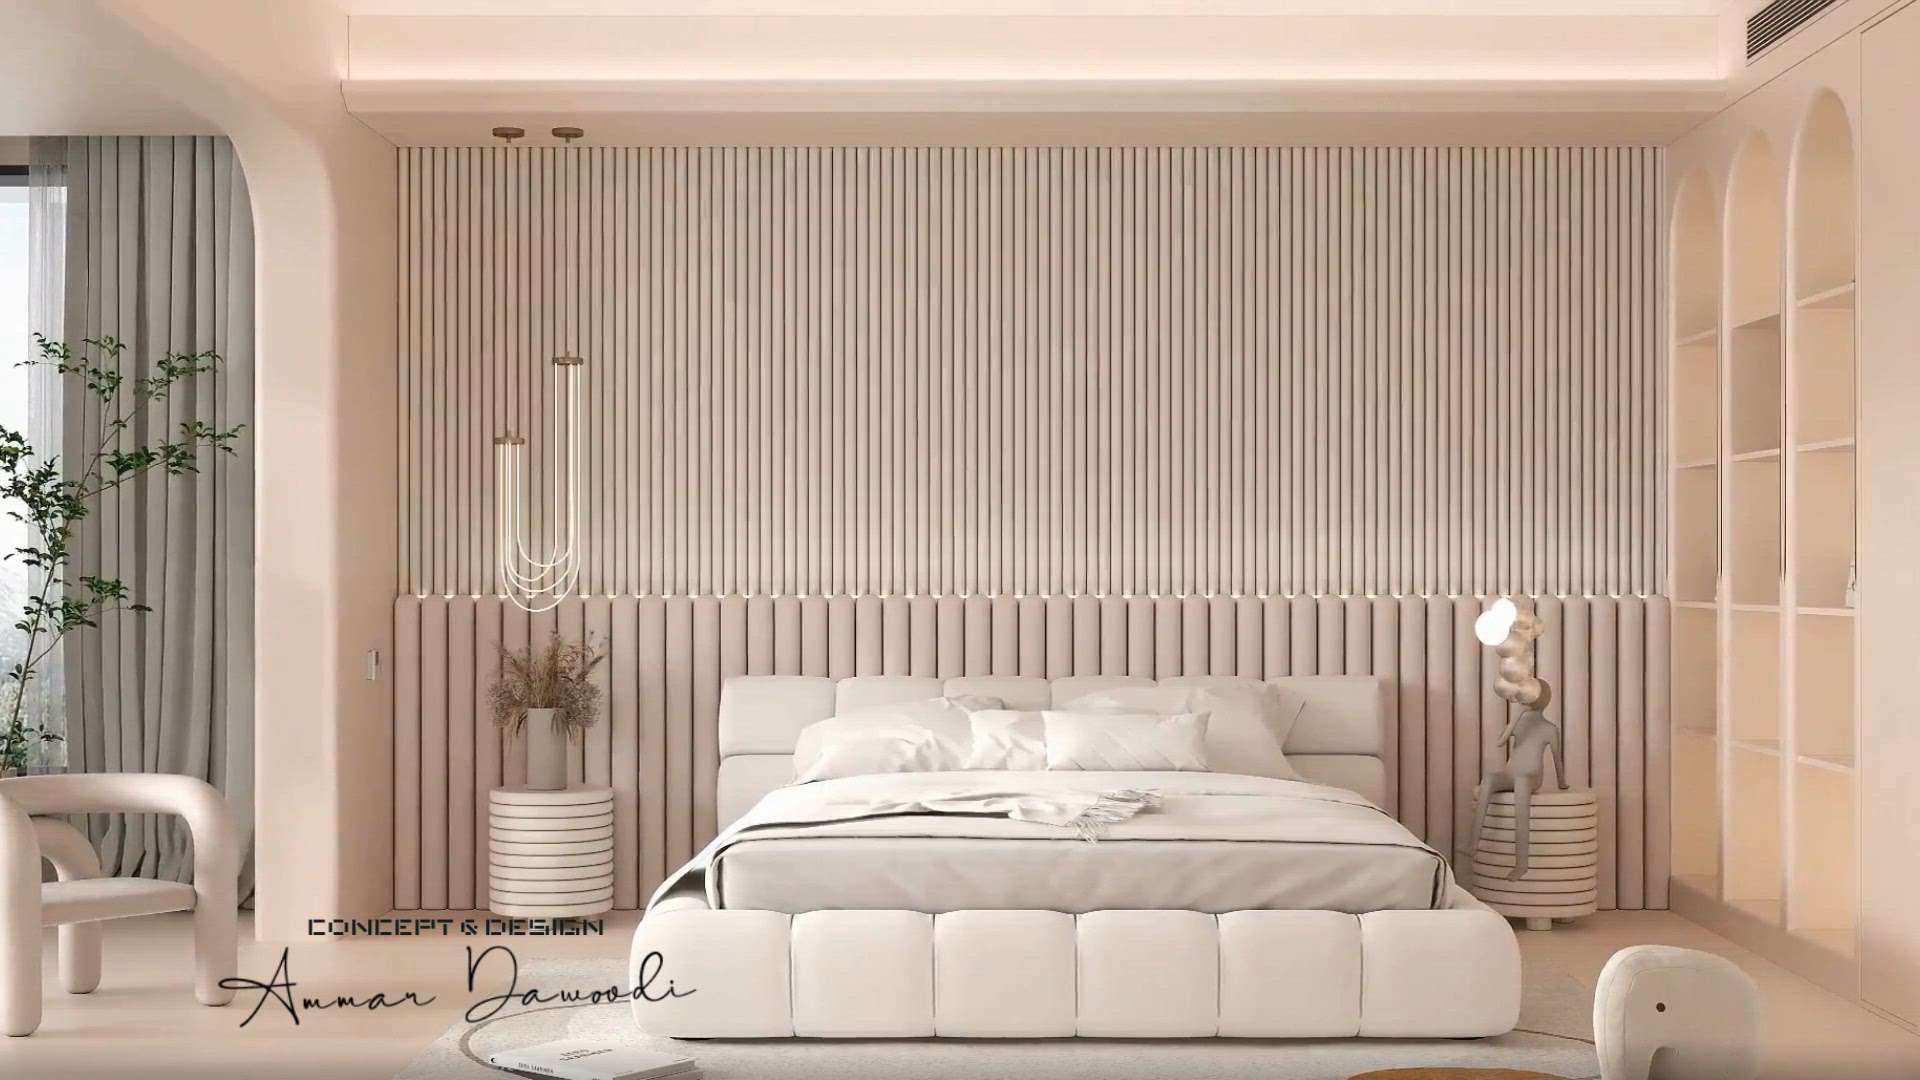 Luxury bedroom 
Contact - 8871874090
.
.
 #LUXURY_INTERIOR  #luxuryfurniture  #InteriorDesigner  #Architectural&Interior  #LUXURY_BED  #Minimalistic  #classic  #MasterBedroom  #KingsizeBedroom  #bedroominteriors  #ModernBedMaking  #moderndesign  #koloviral  #koloapp  #InteriorDesigner